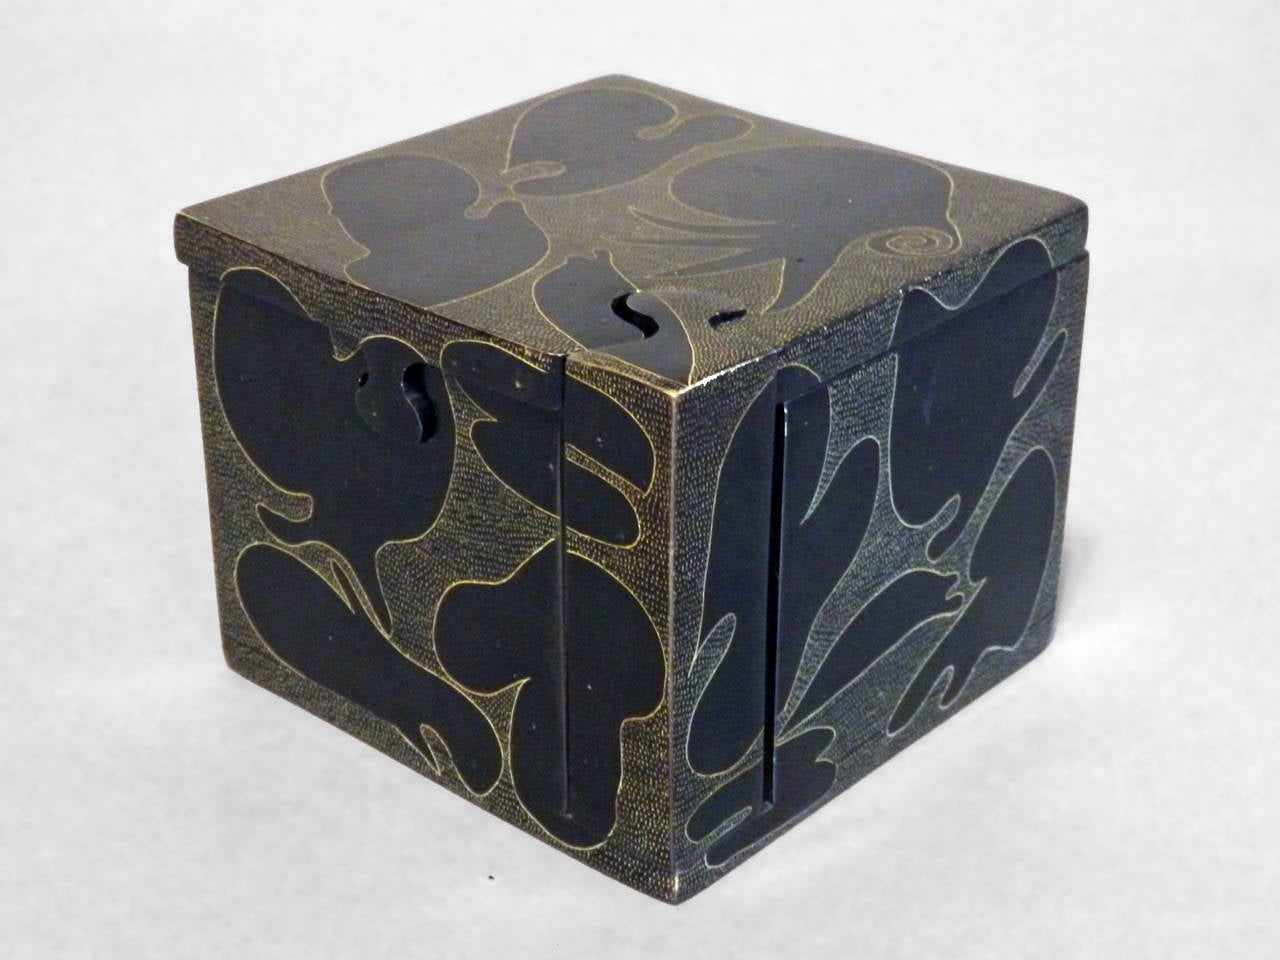 Decorated stone puzzle box.